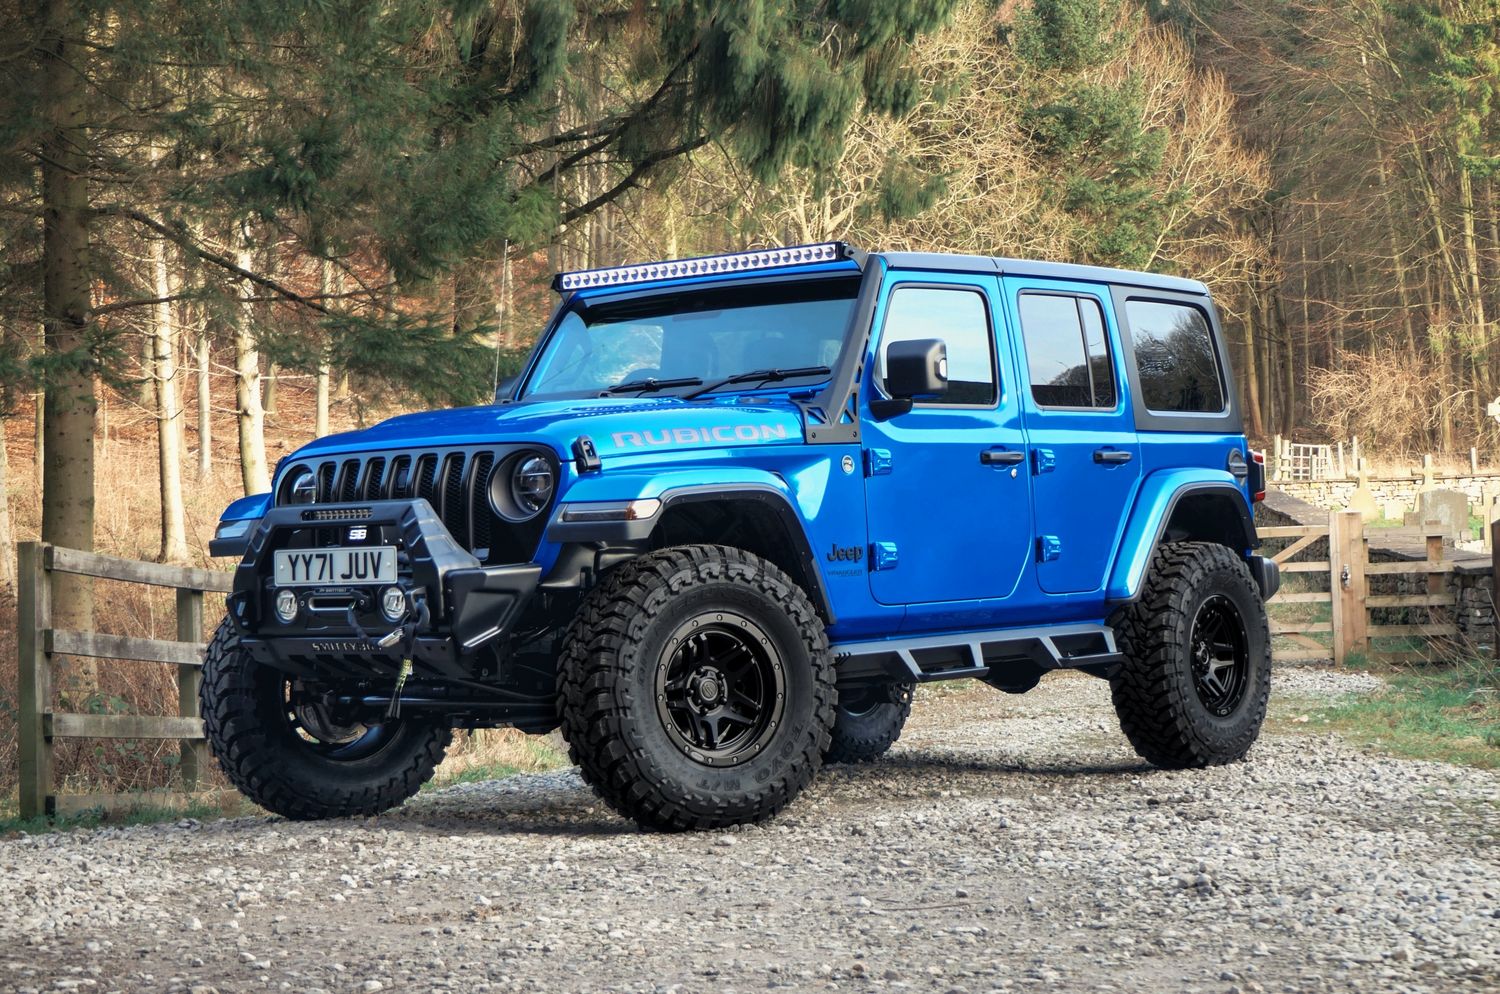 Arriba 40+ imagen lifted blue jeep wrangler